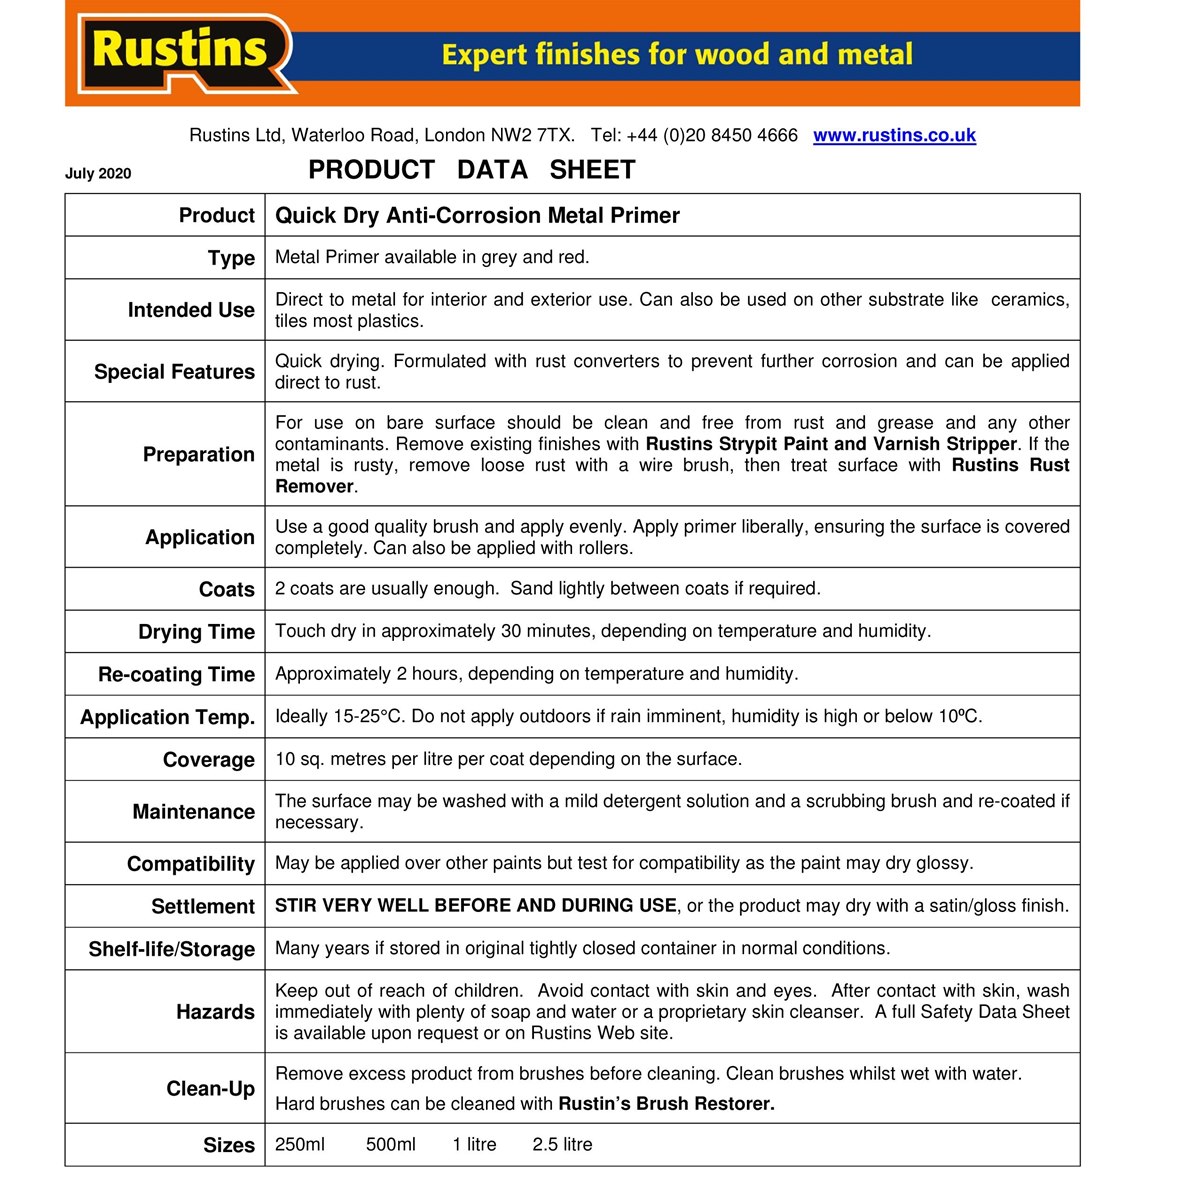 Rustins Quick Dry Anti-Corrosion Metal Primer Instructions